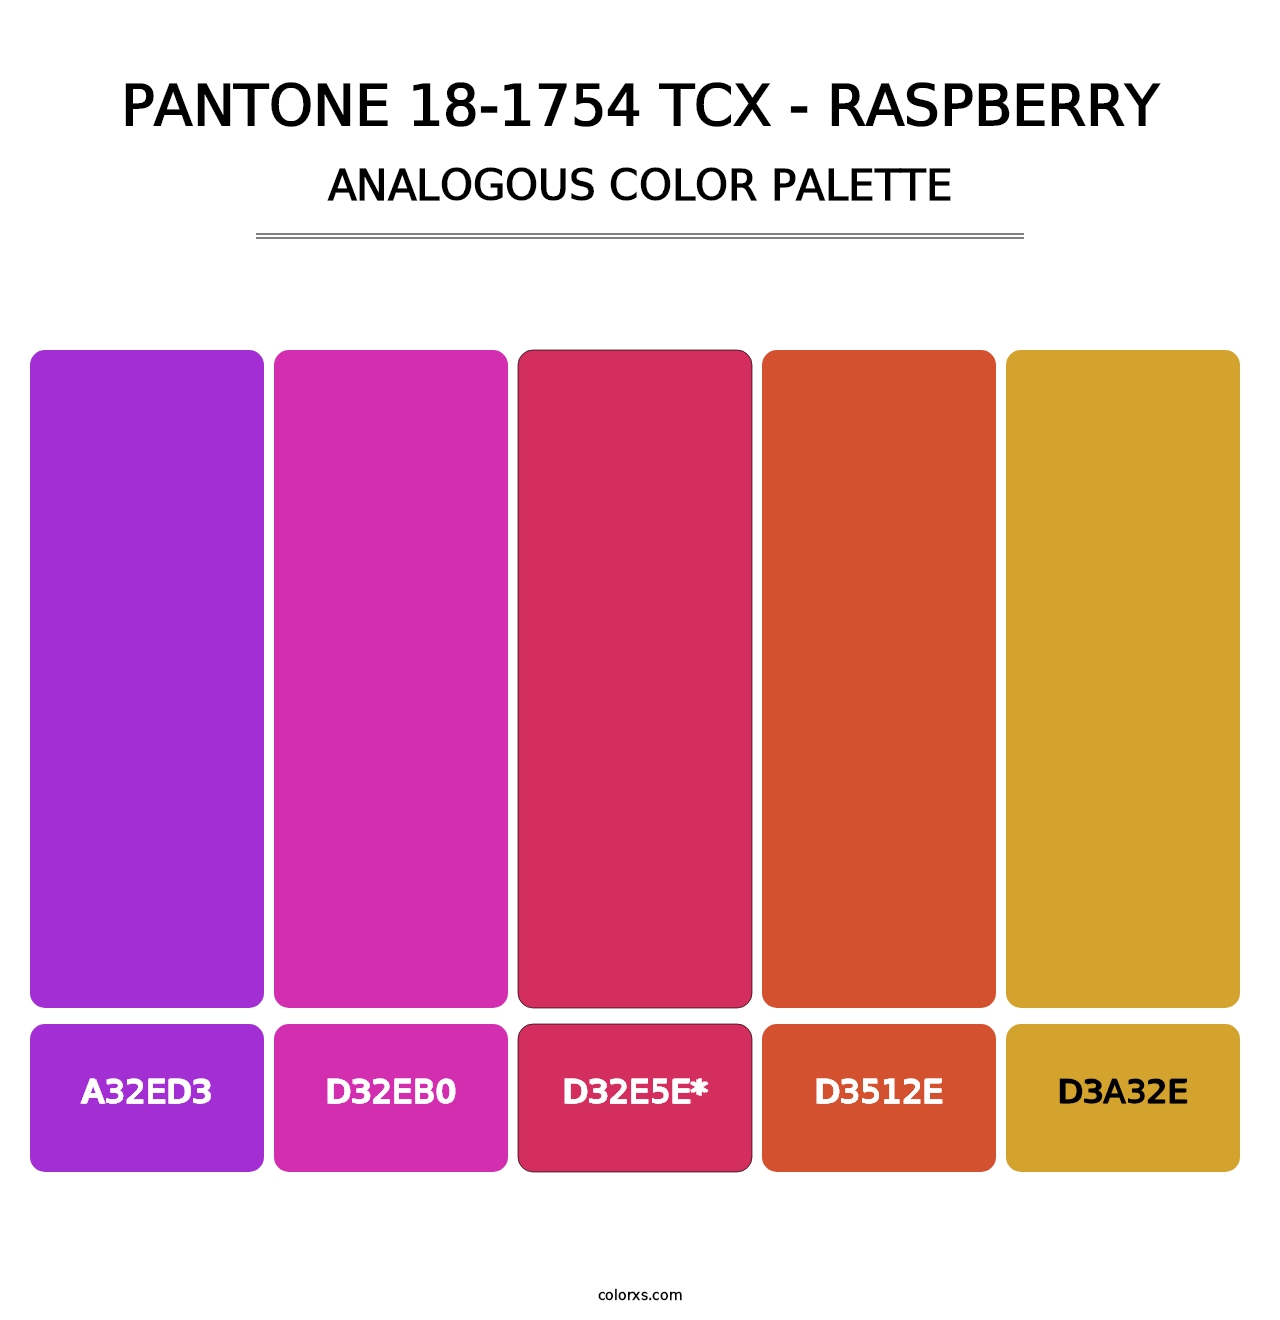 PANTONE 18-1754 TCX - Raspberry - Analogous Color Palette